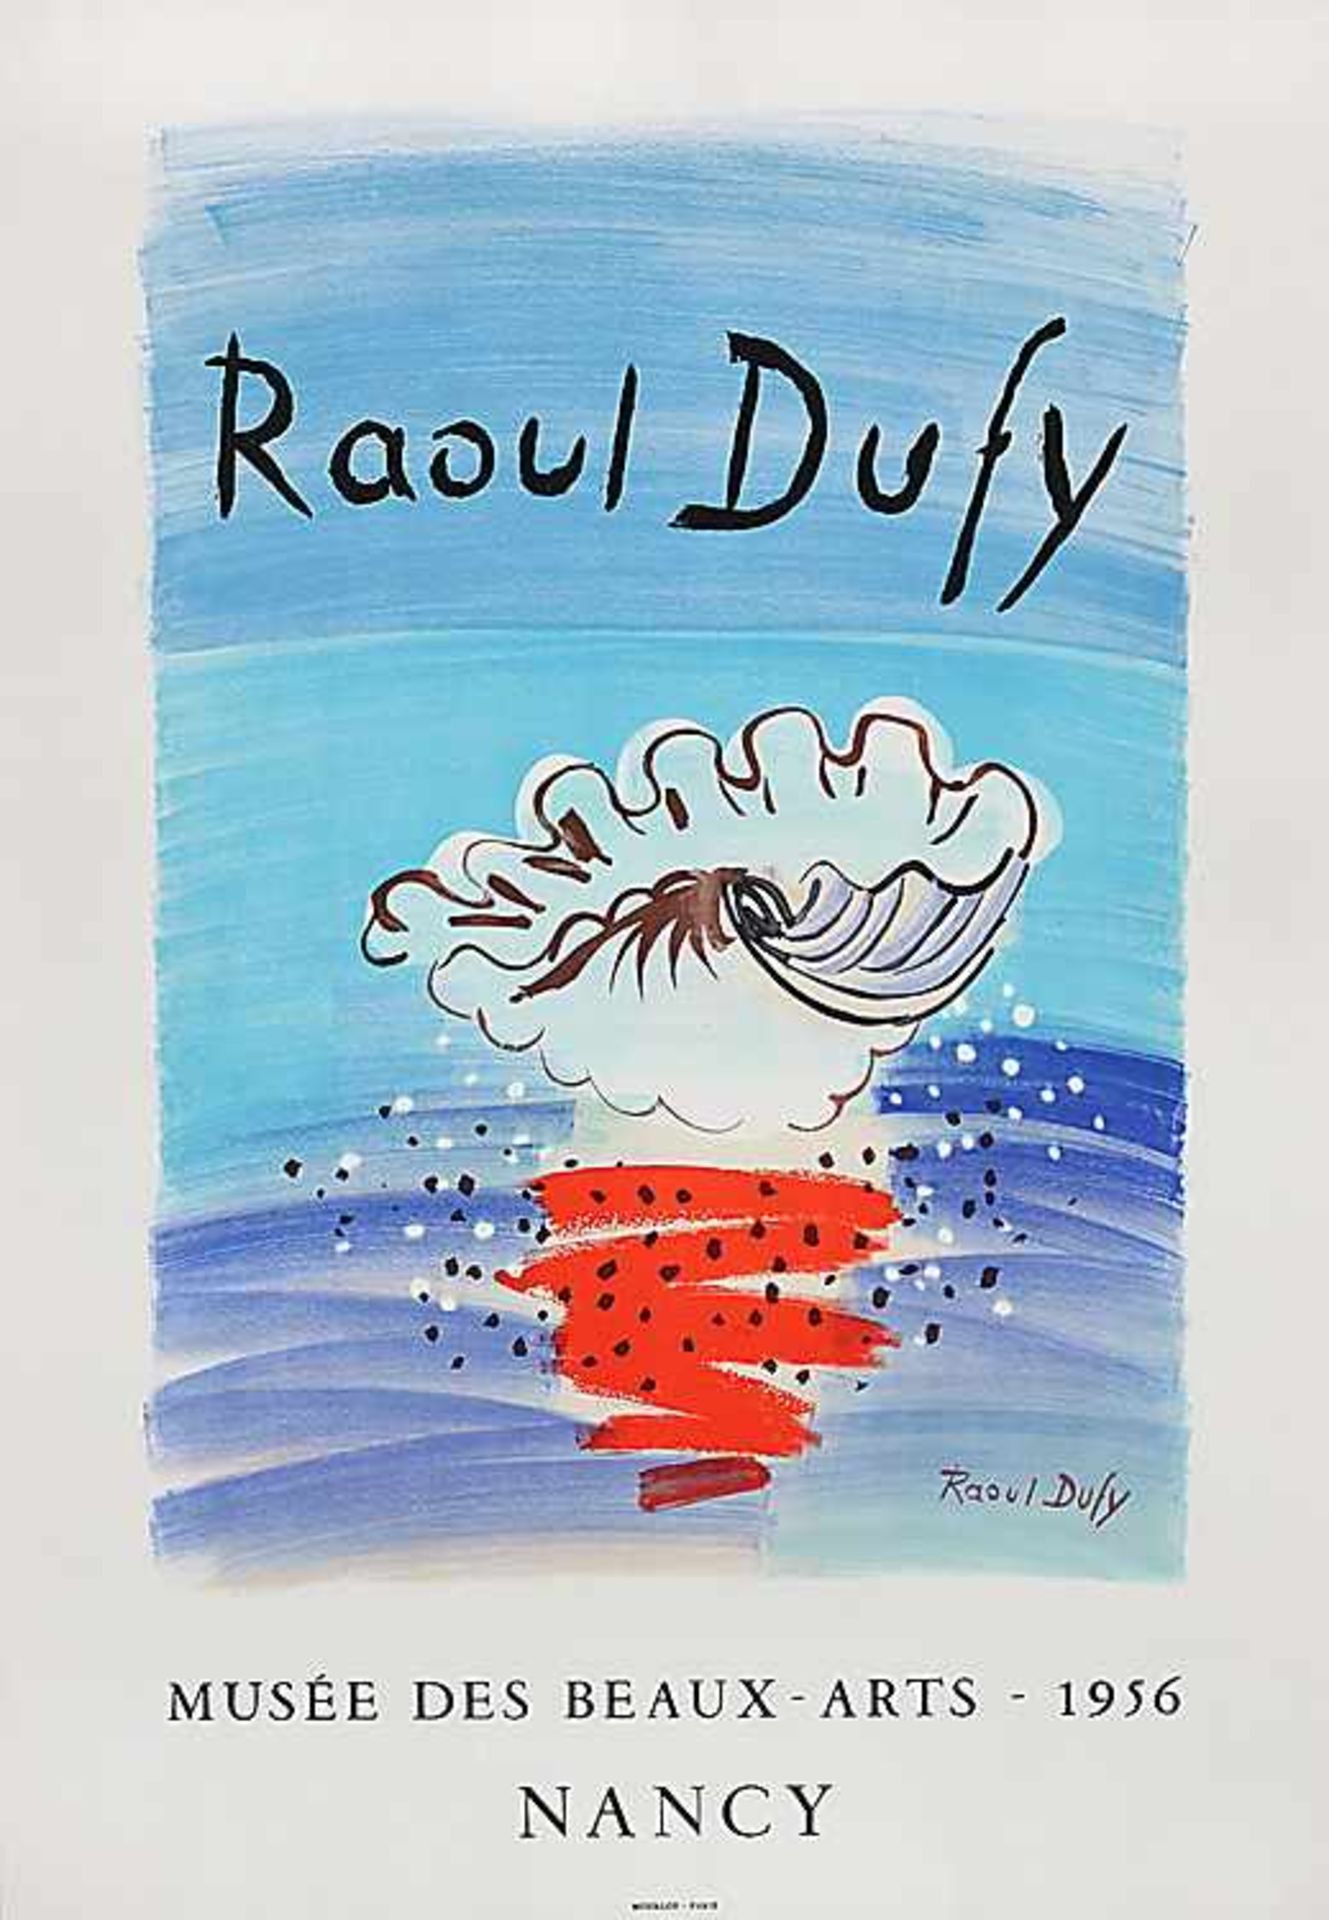 AusstellungsplakatRaoul Dufy.Mit Farblithografie von Raoul Dufy. Nancy 1956. Bl. 64 x 44,4 cm.